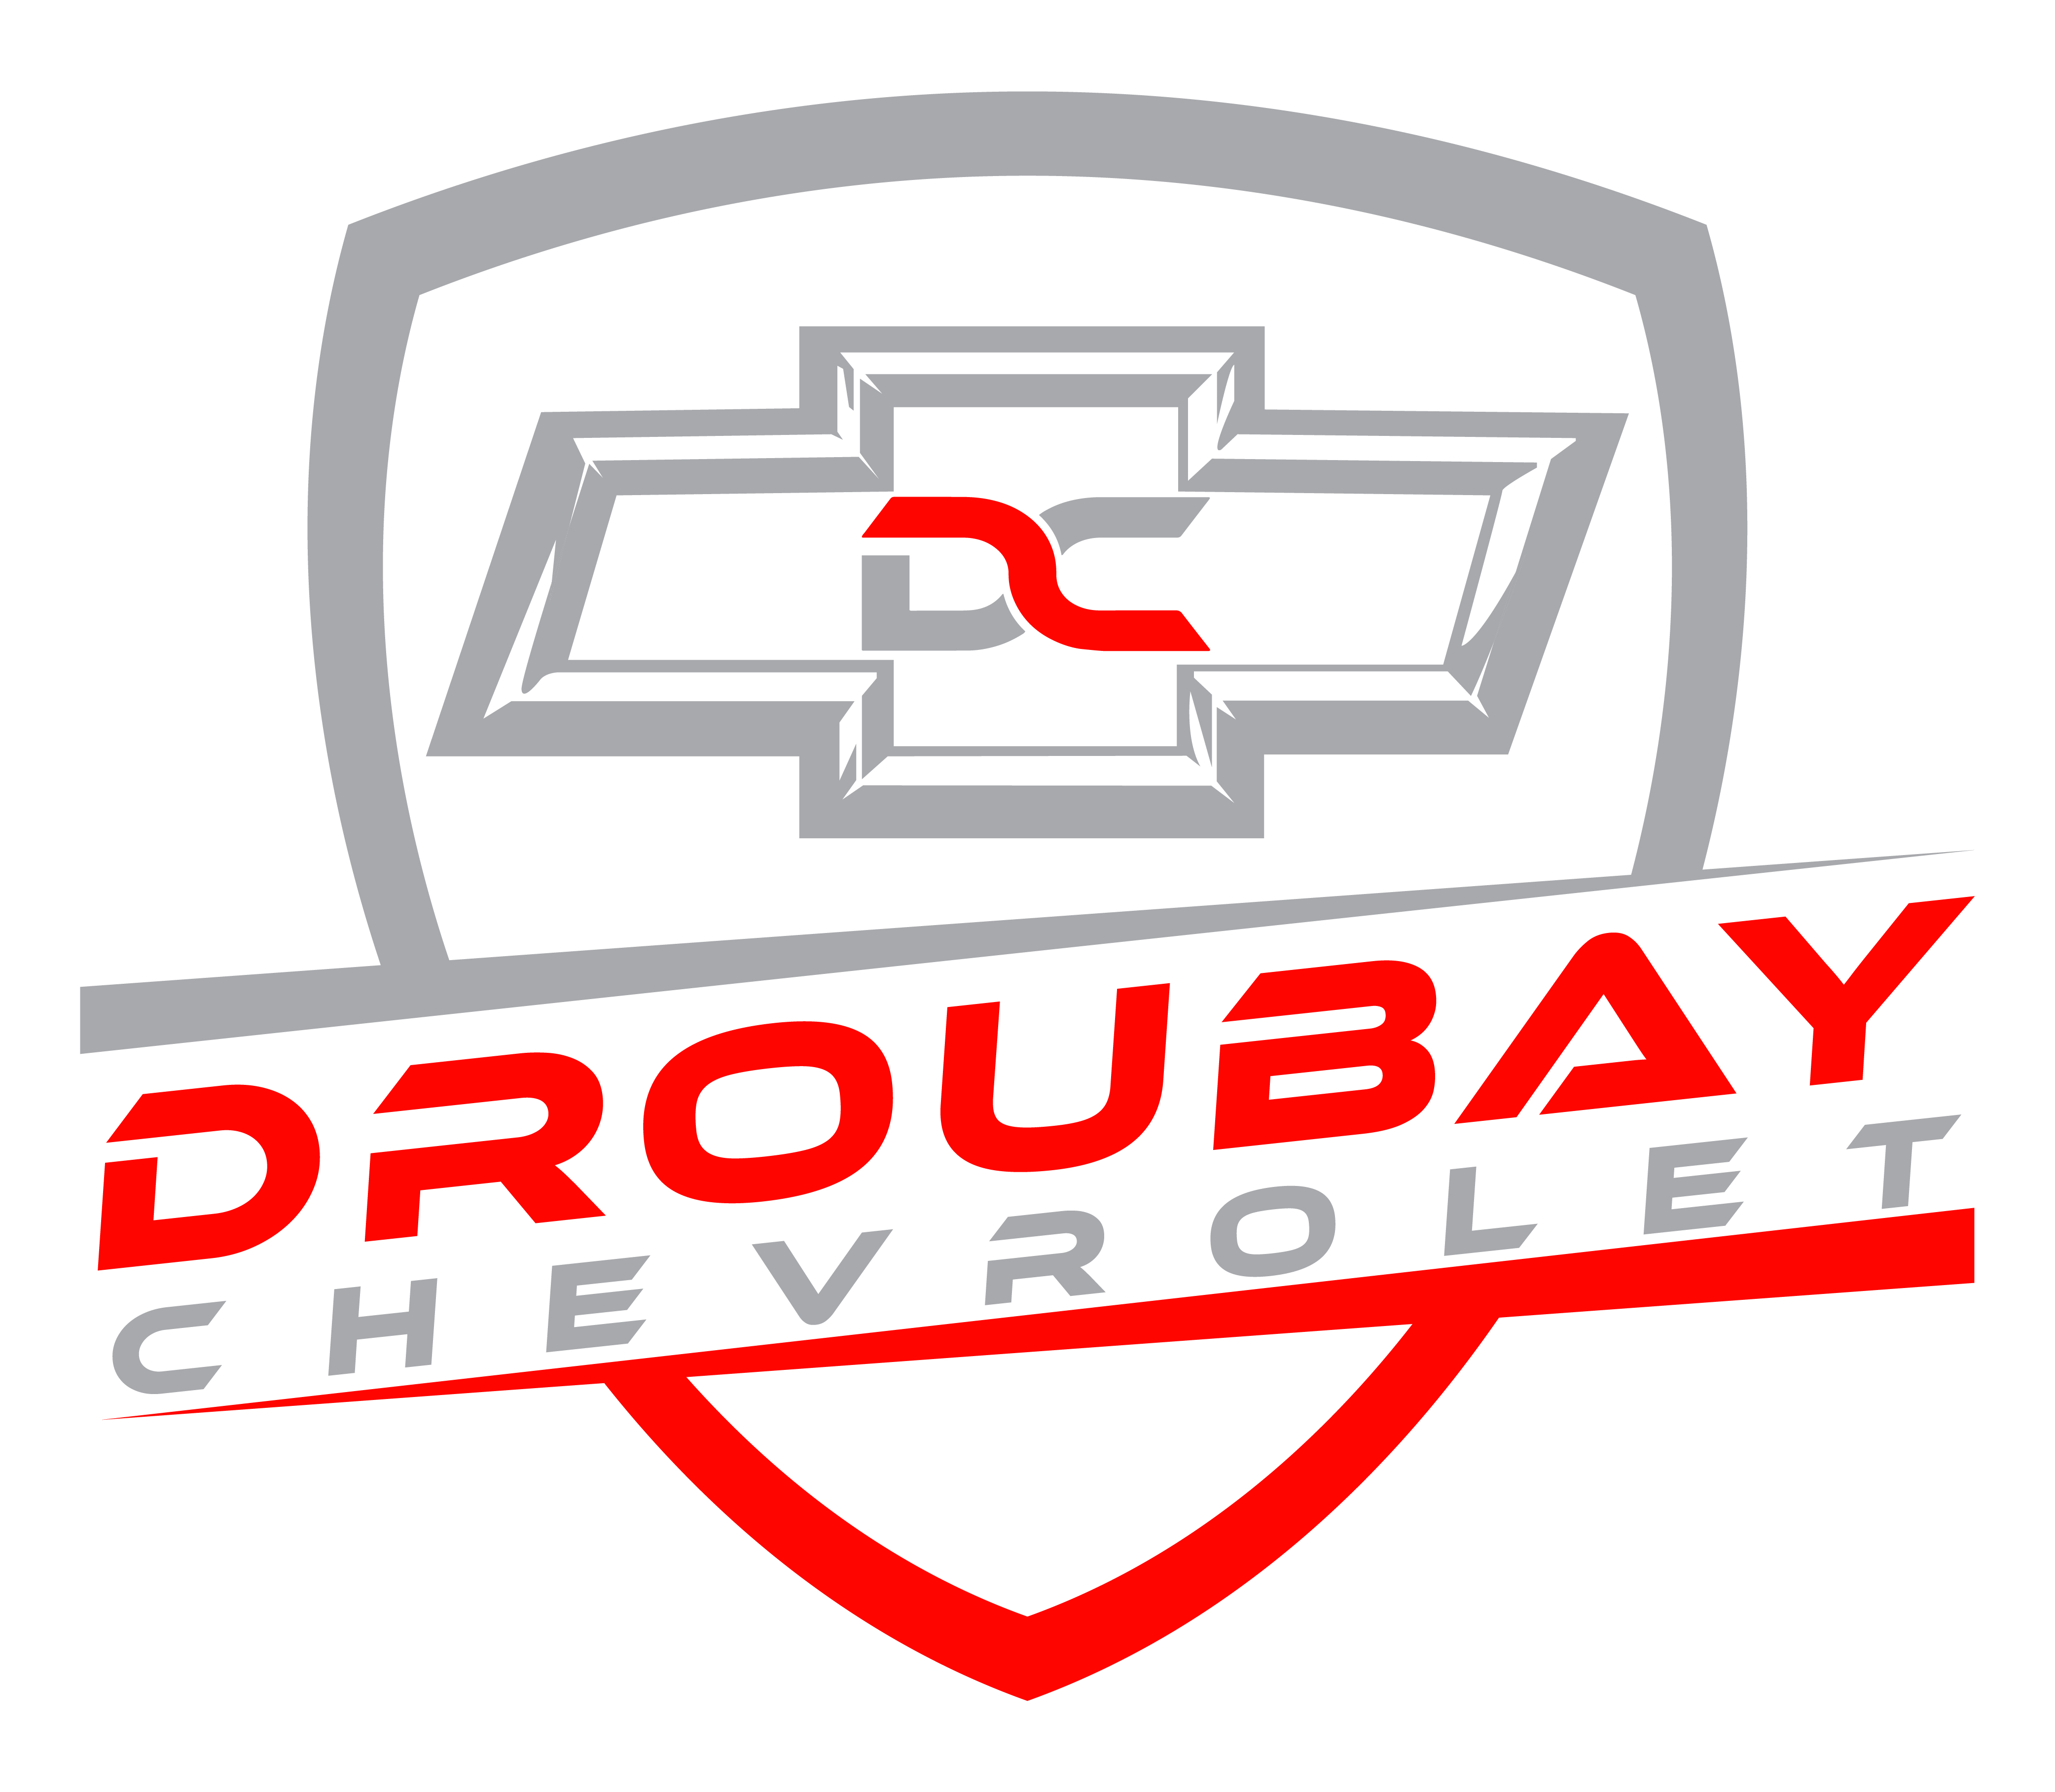 Droubay Chevrolet